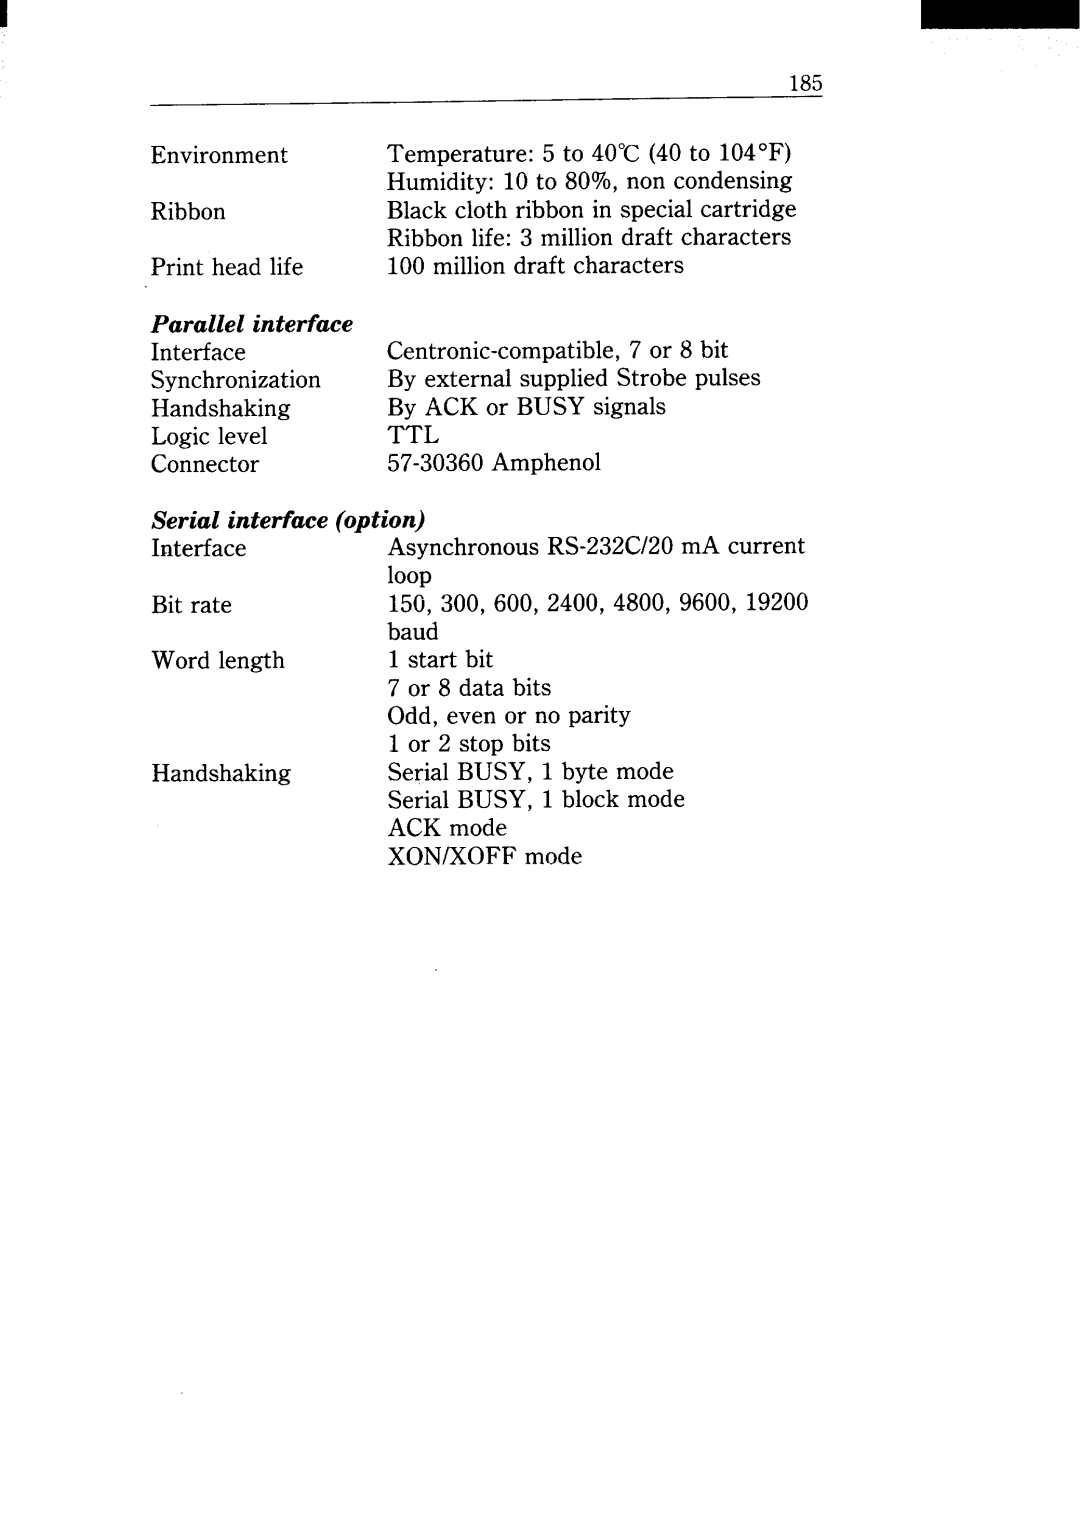 Star Micronics NX-15 user manual Serial interface option, Environment Ribbon Print head life 